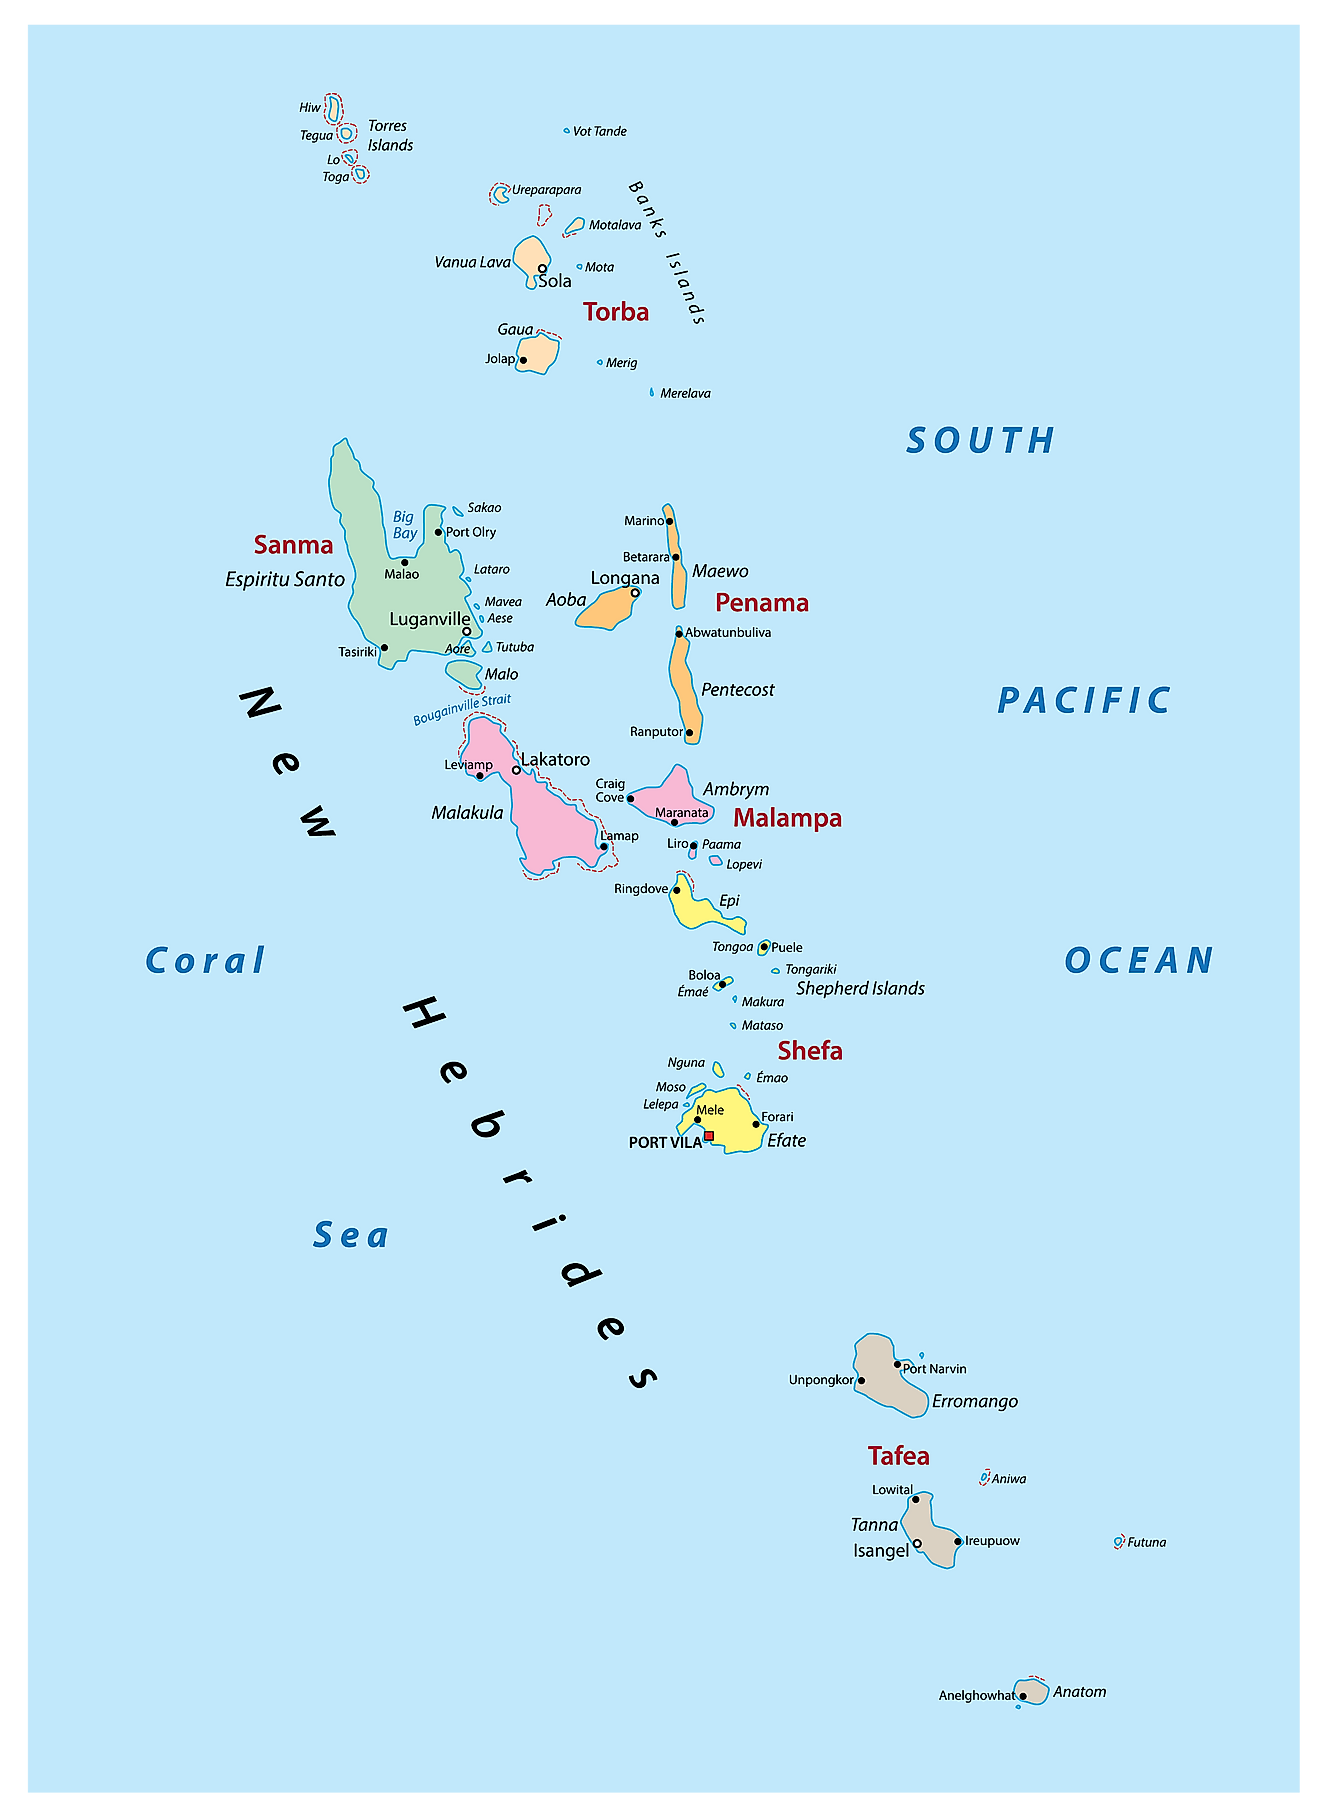 Political Map of Vanuatu showing its 6 provinces and the capital city Port Vila